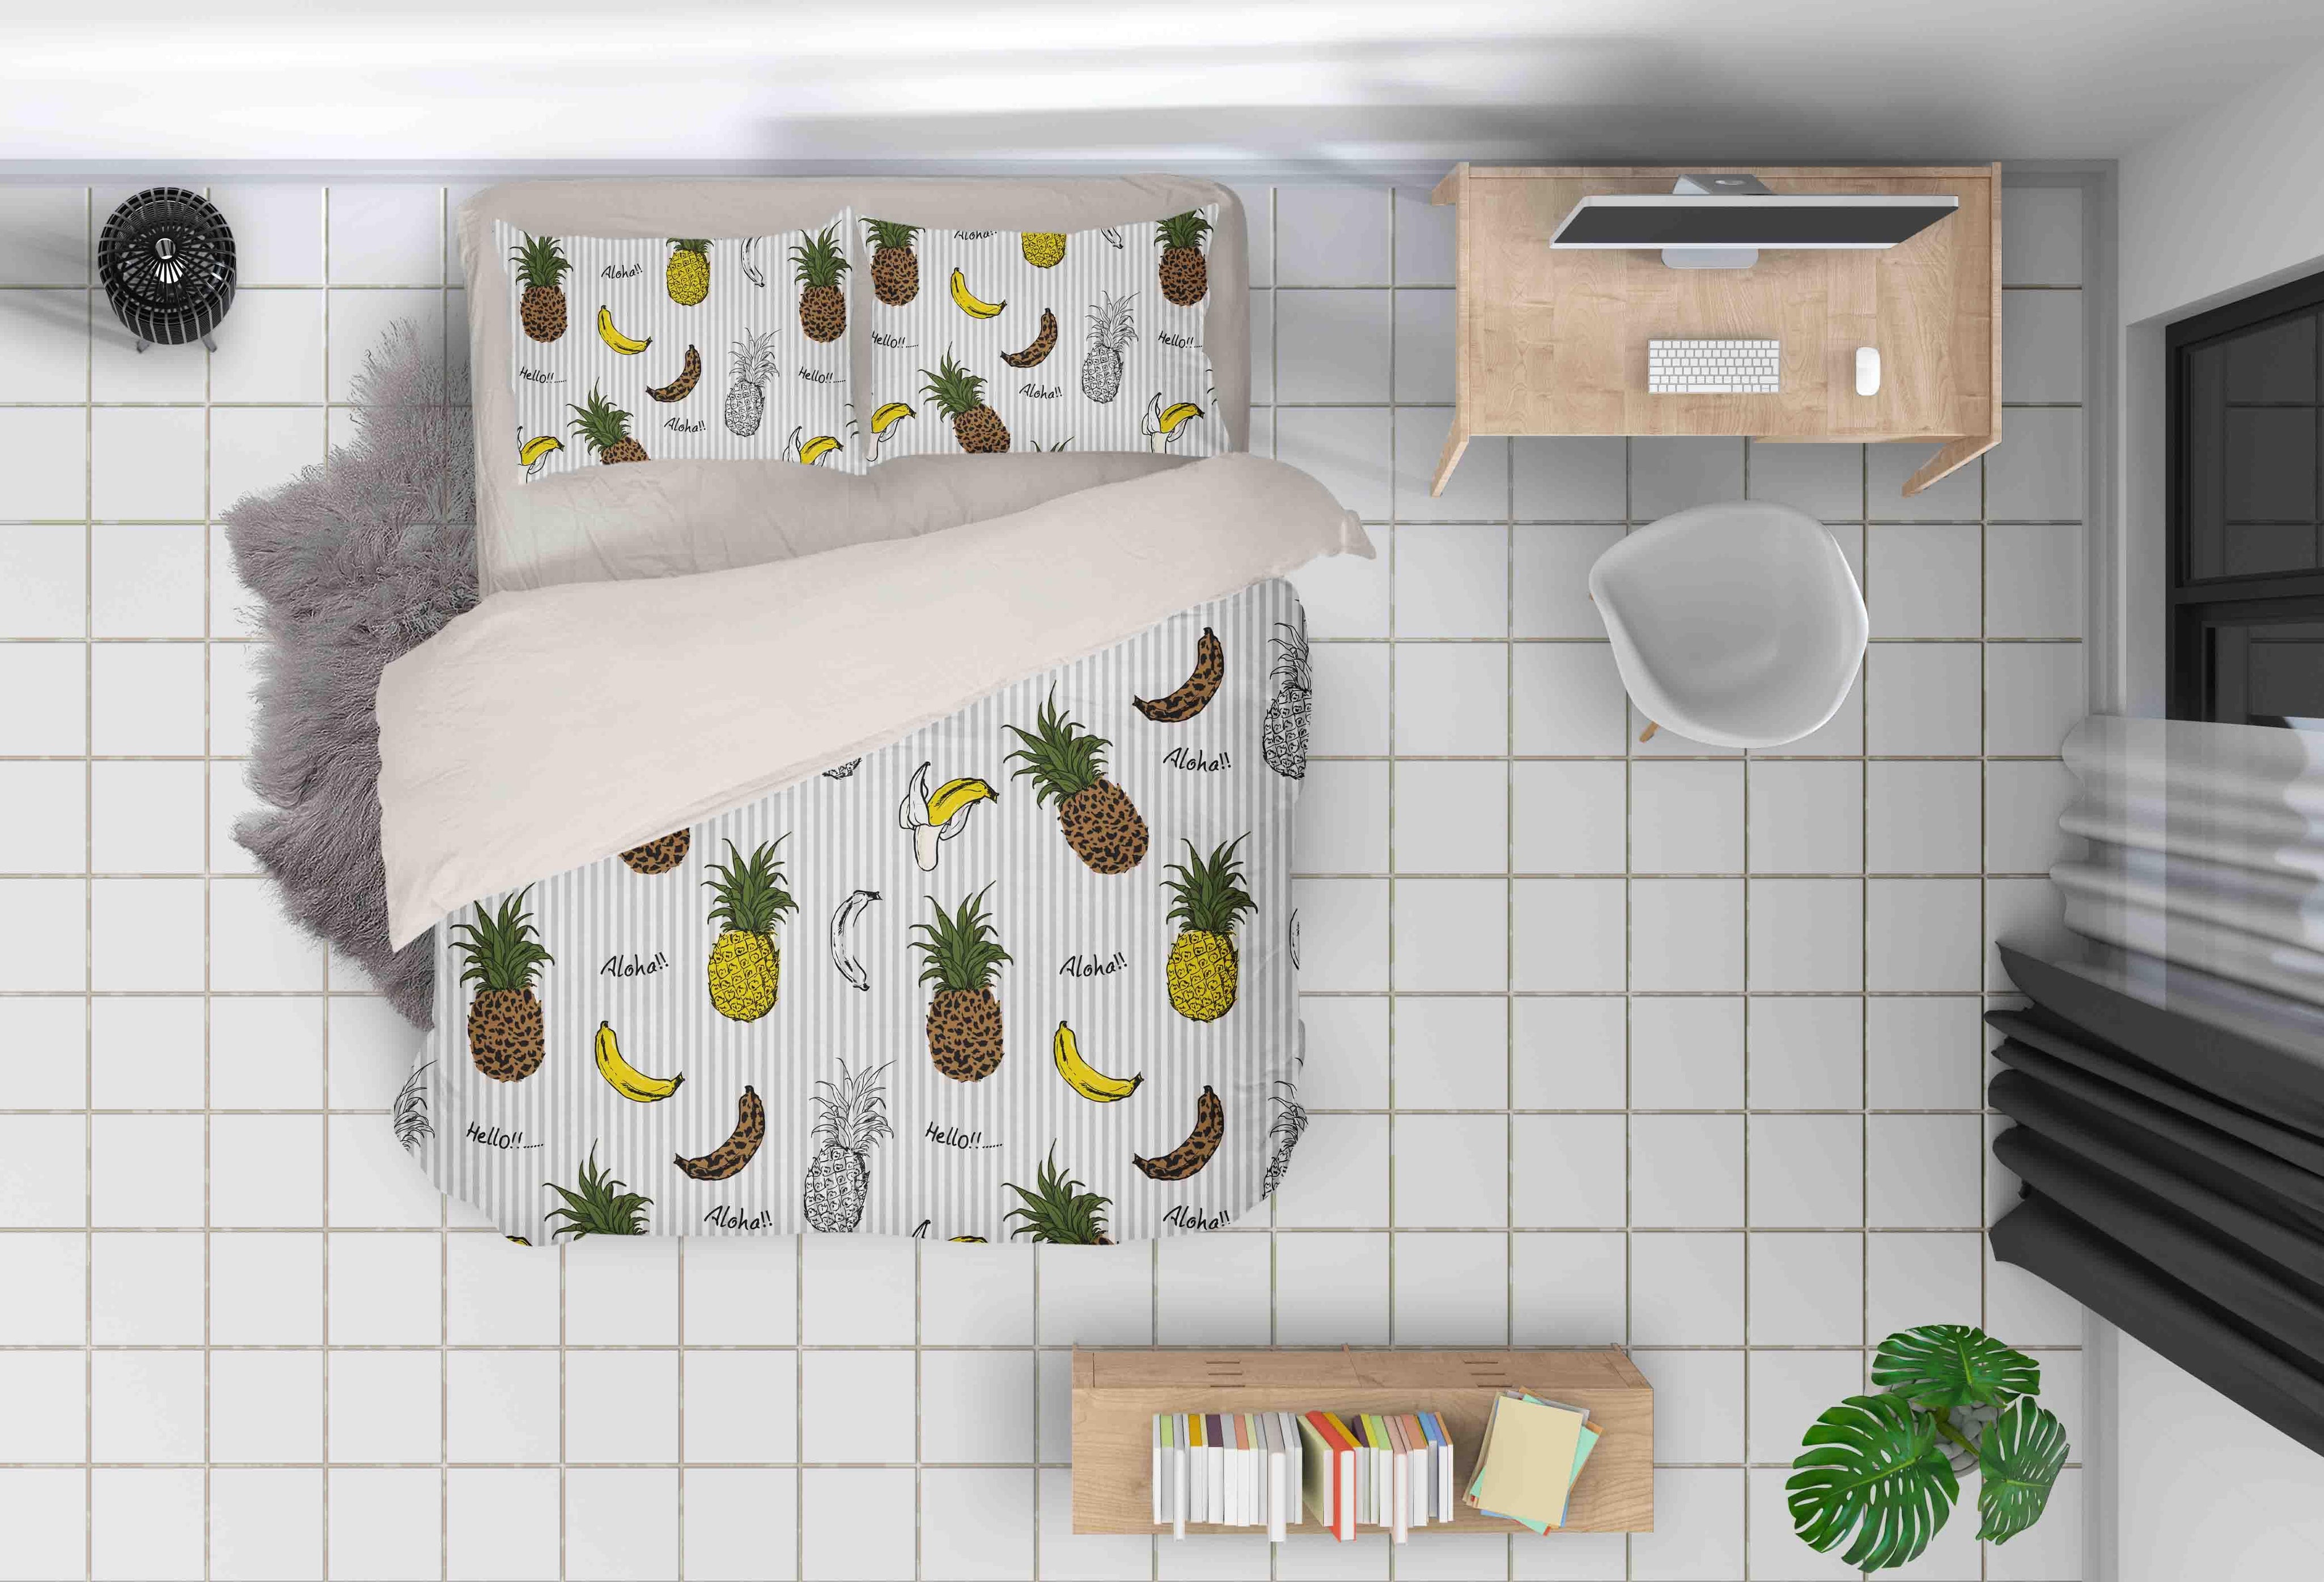 3D Pineapple Banana Stripes Quilt Cover Set Bedding Set Pillowcases 62- Jess Art Decoration